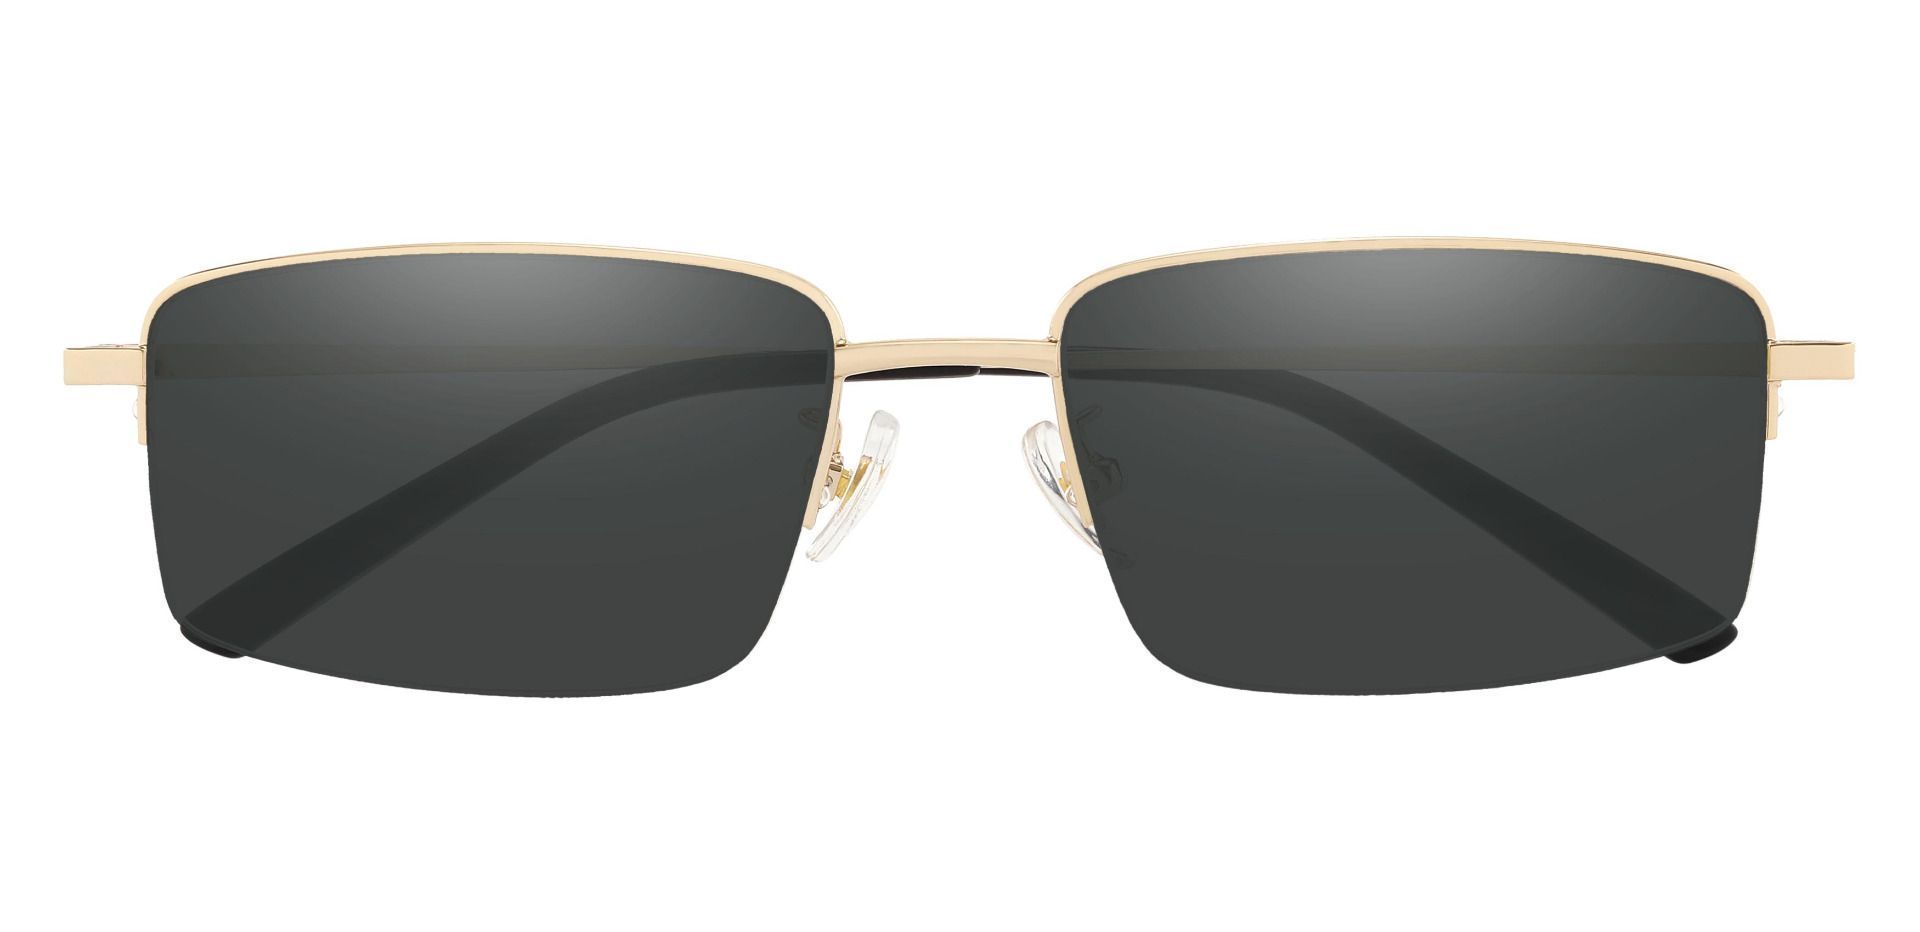 Wayne Rectangle Prescription Sunglasses - Gold Frame With Gray Lenses